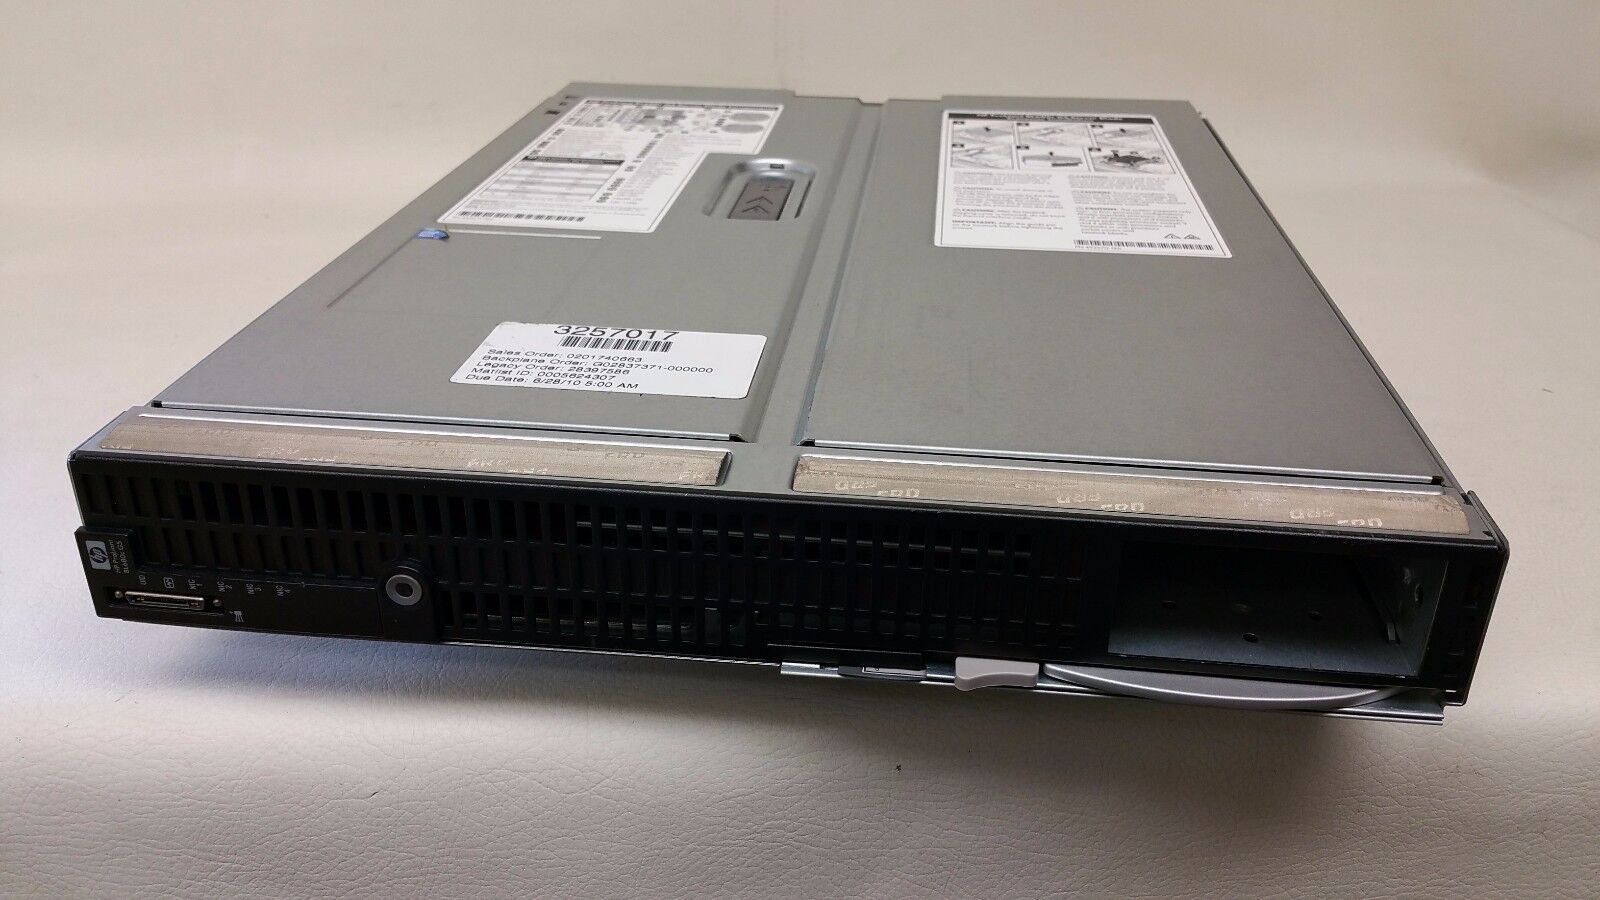 HP BL680c G5 4x 6-Core 2.4GHz E7450 12MB 32GB RAM Blade Server P400i RAID